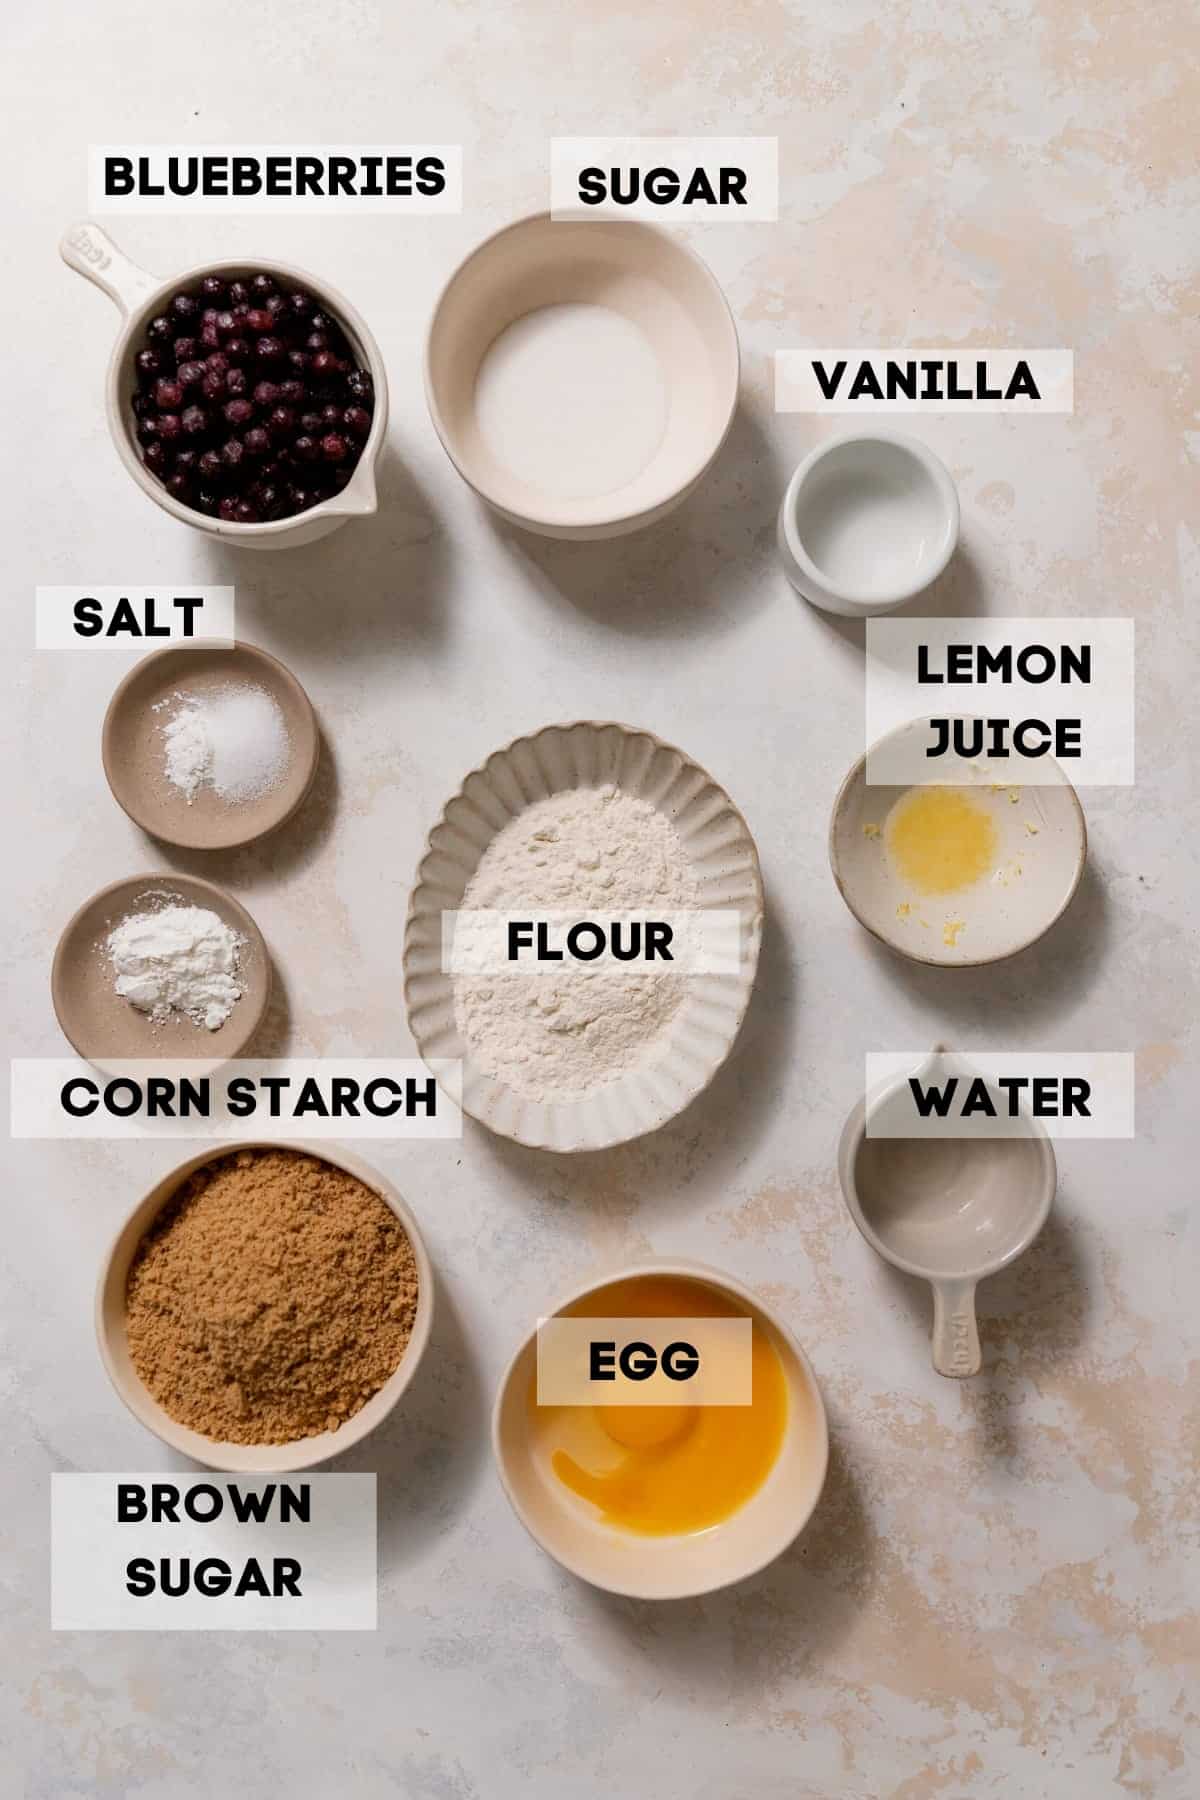 ingredients needed to make blueberry blondies.